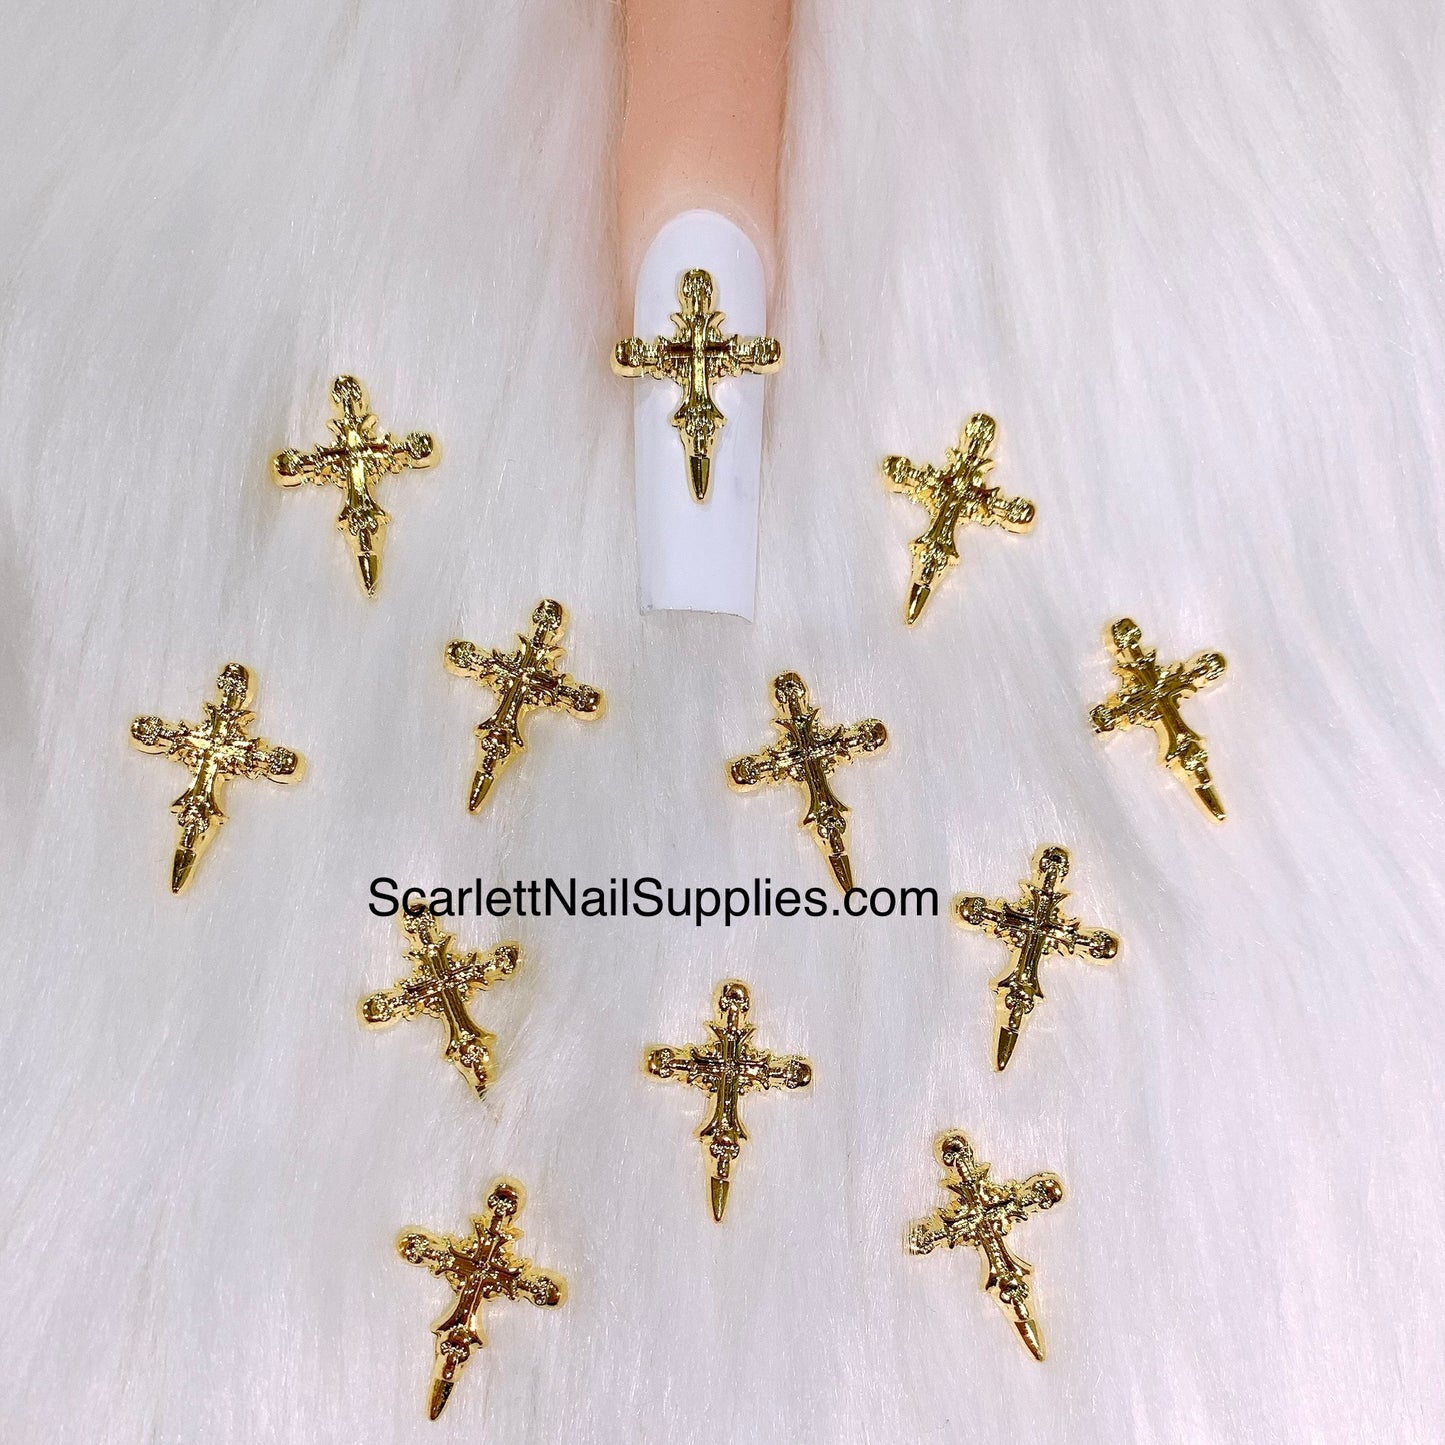 15pcs Gold XL cross charms